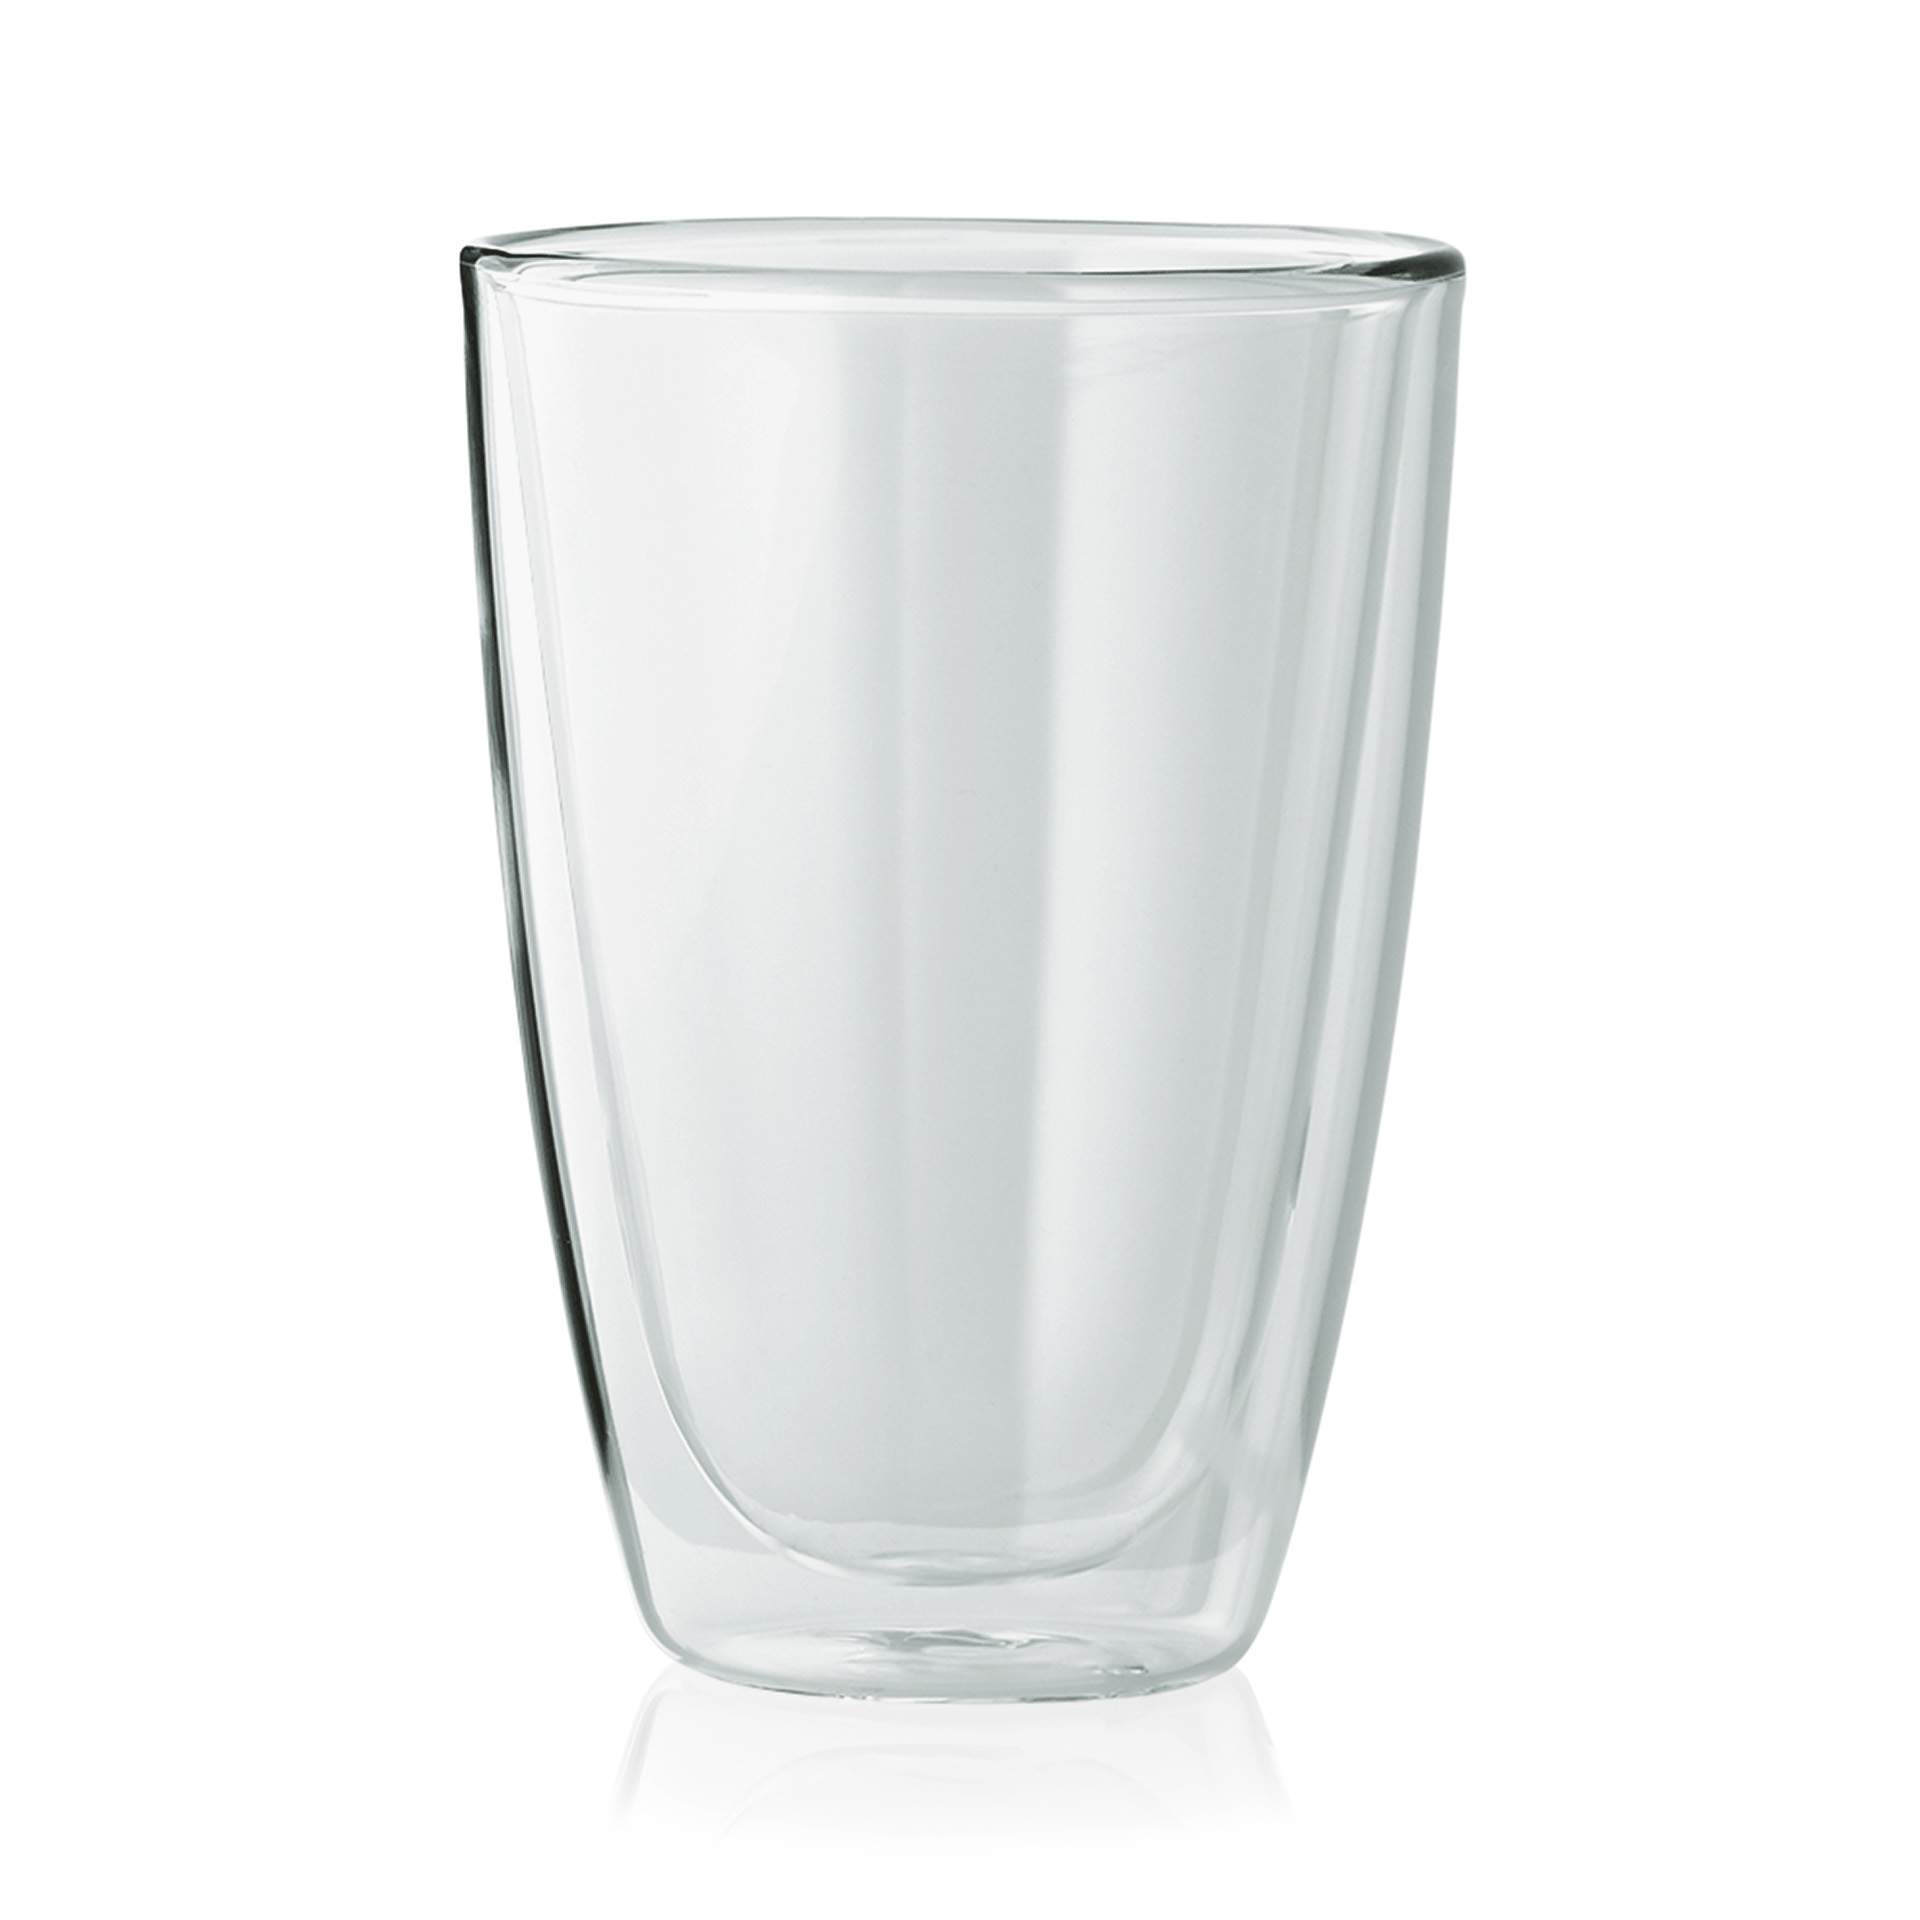 Latte Macchiato Glas - Borosilikatglas - Serie Lounge - Abm. 12,3 cm - Ø oben / unten 8,2 / 5,4 cm - Inhalt 0,31 l - Glas - 1773031-A